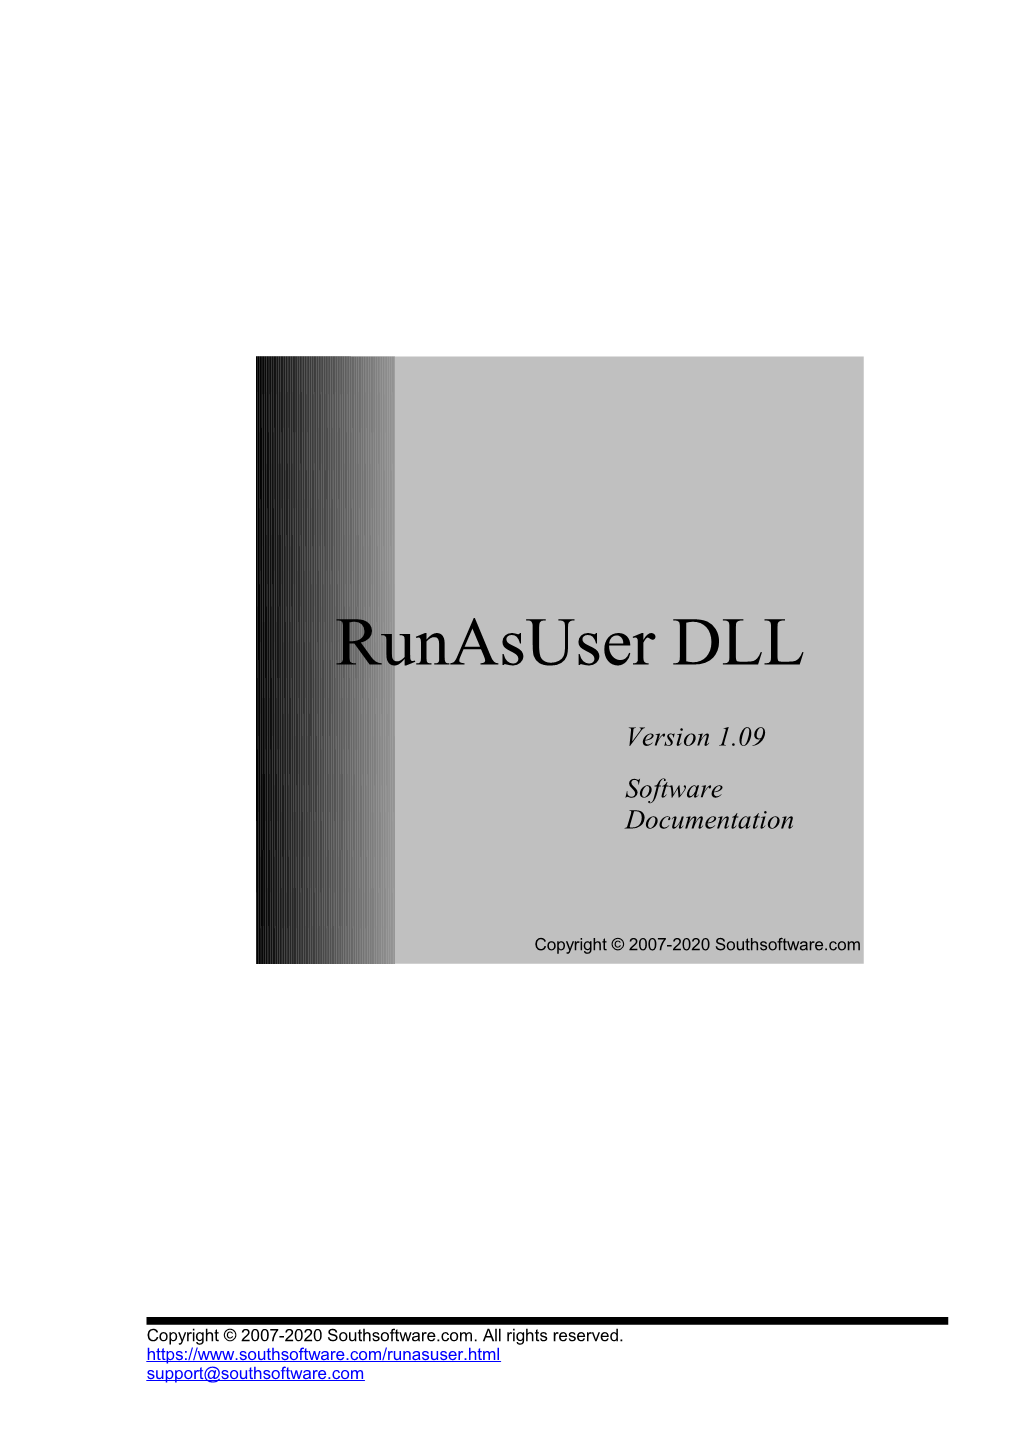 Runasuser DLL Documentation